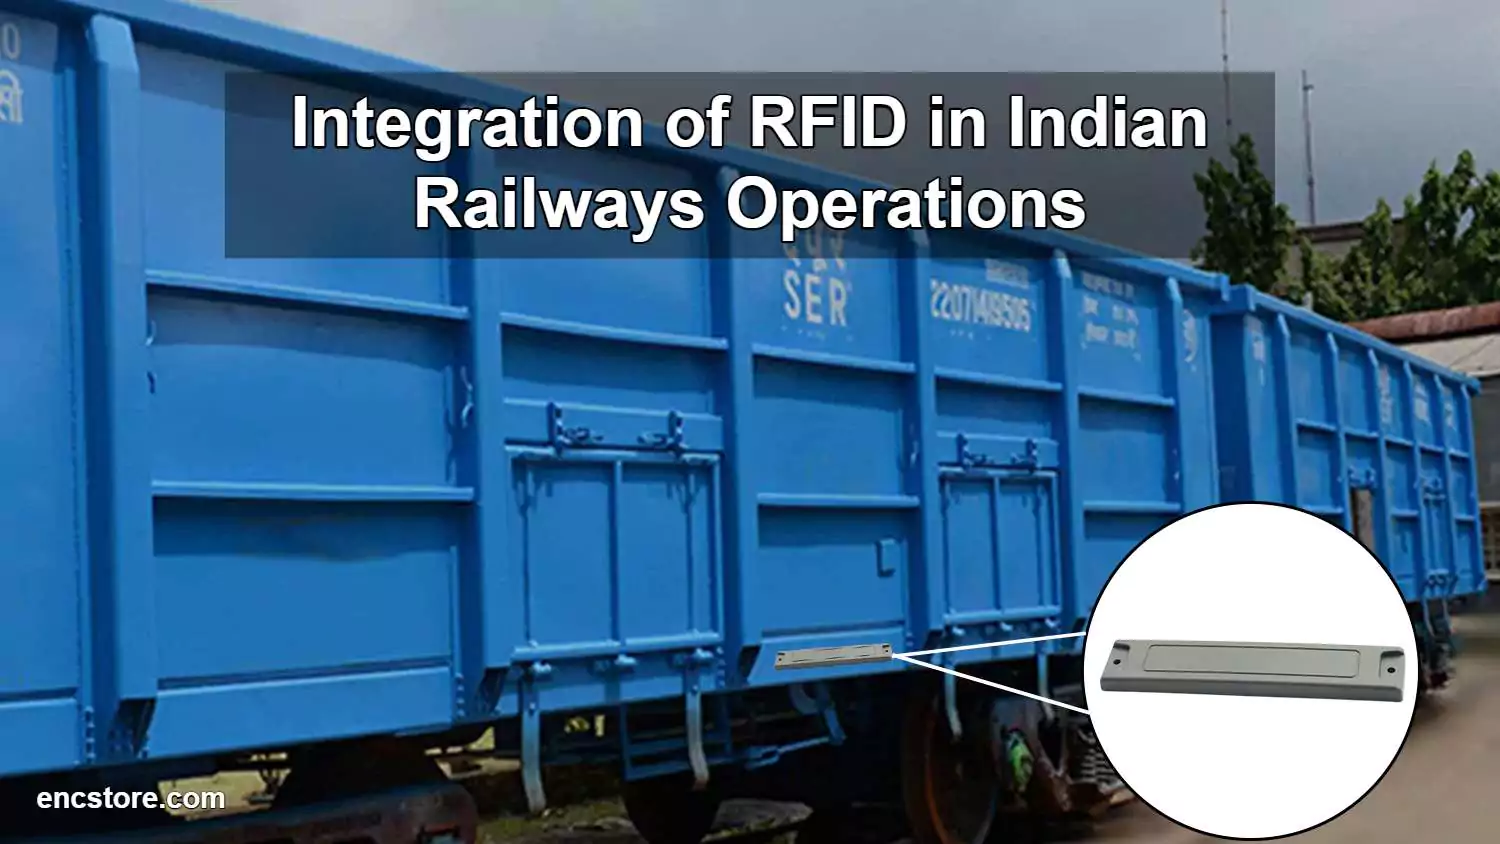 RFID in Indian Railways